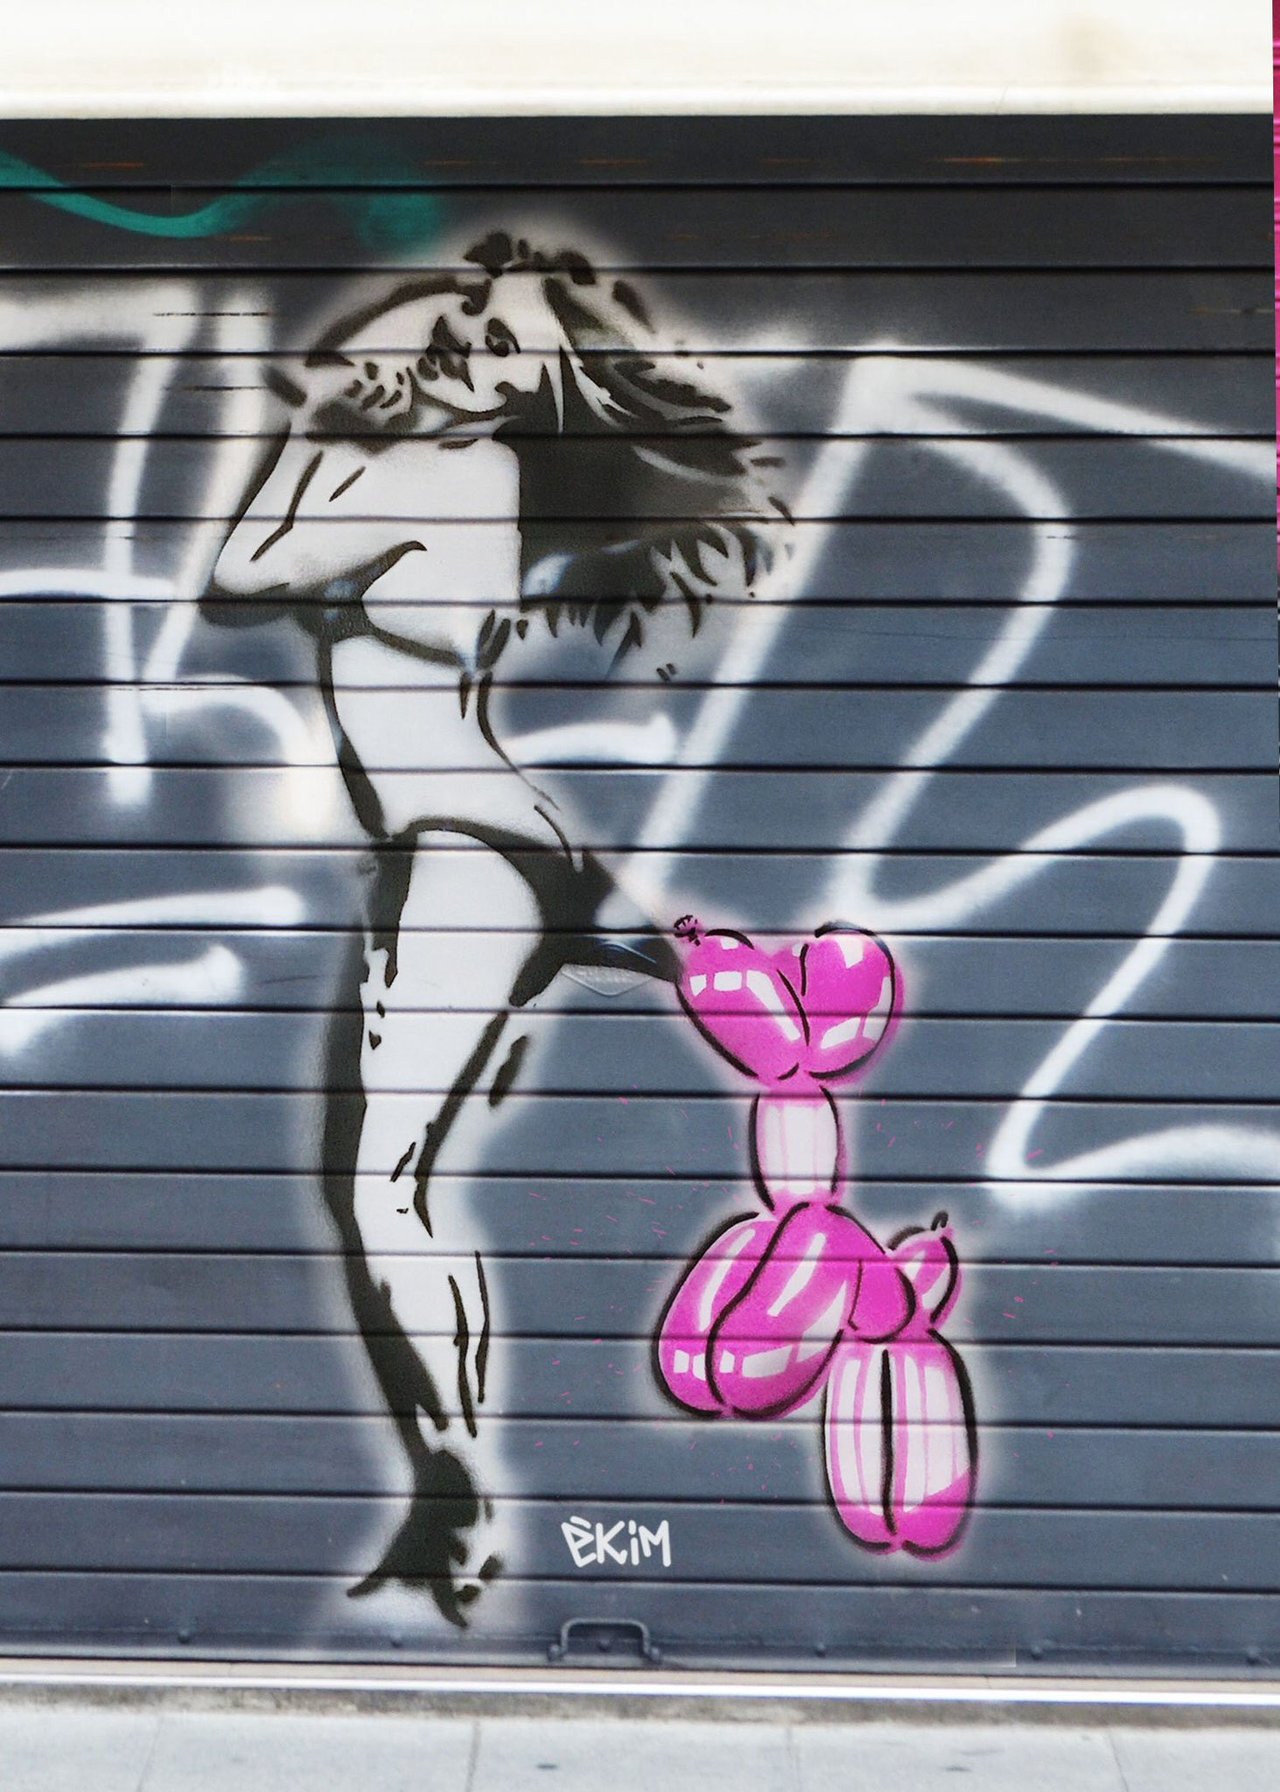 Happy 50th @kylieminogue still looking hot!!! #ekim #kylie50 #KylieGoldenYears #kylieat50 #streetart #graffiti #kyliebirthday https://t.co/ADQQ9nvZ41